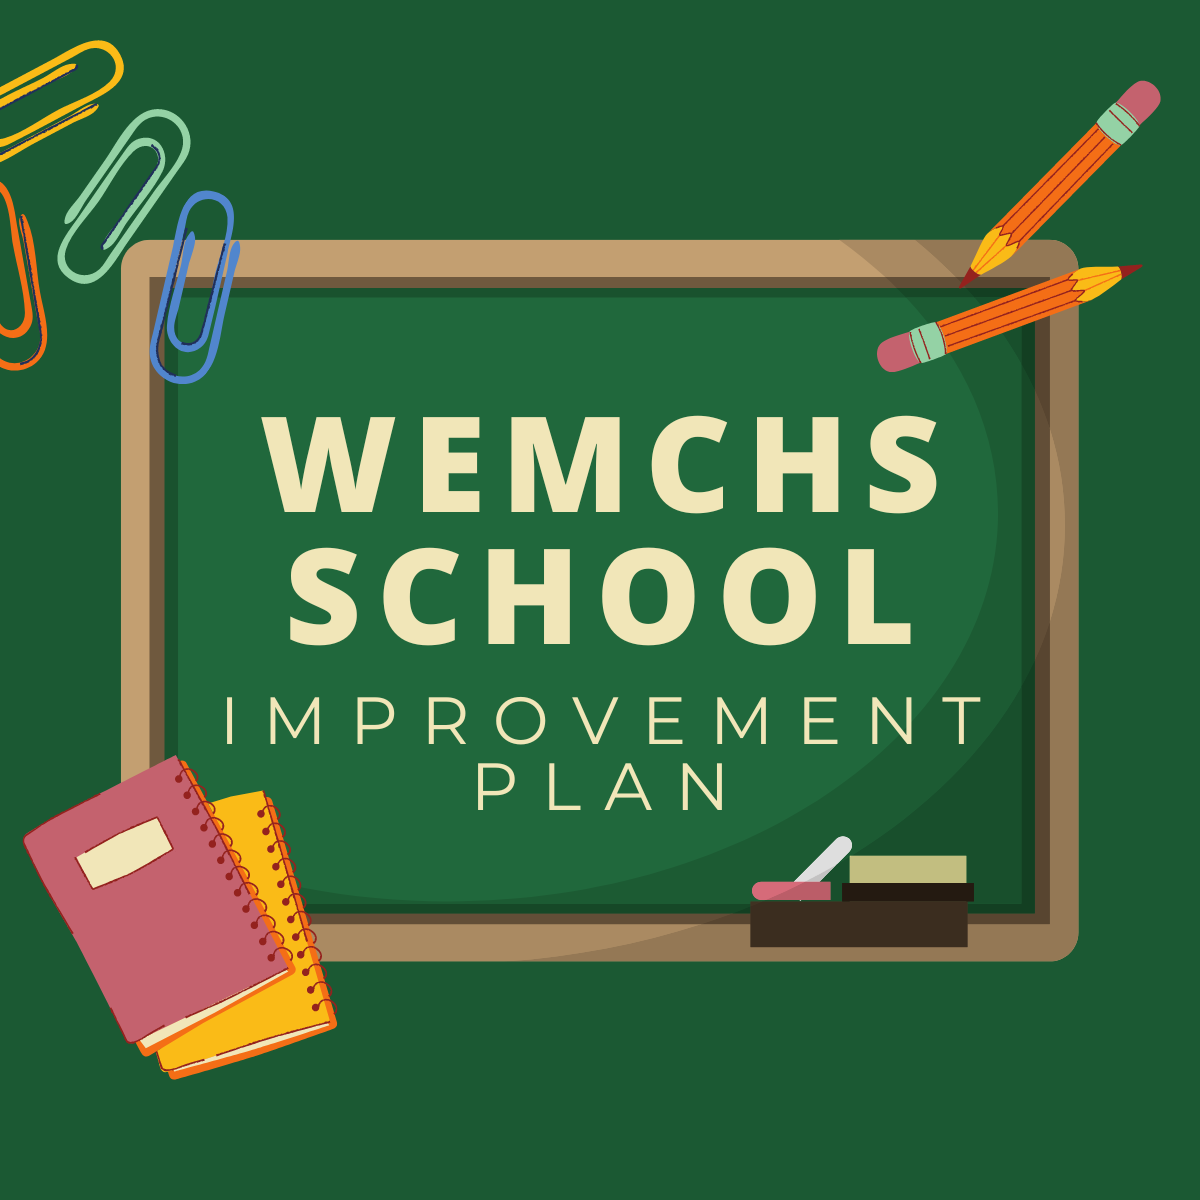 WEMCHS School Improvement Plan